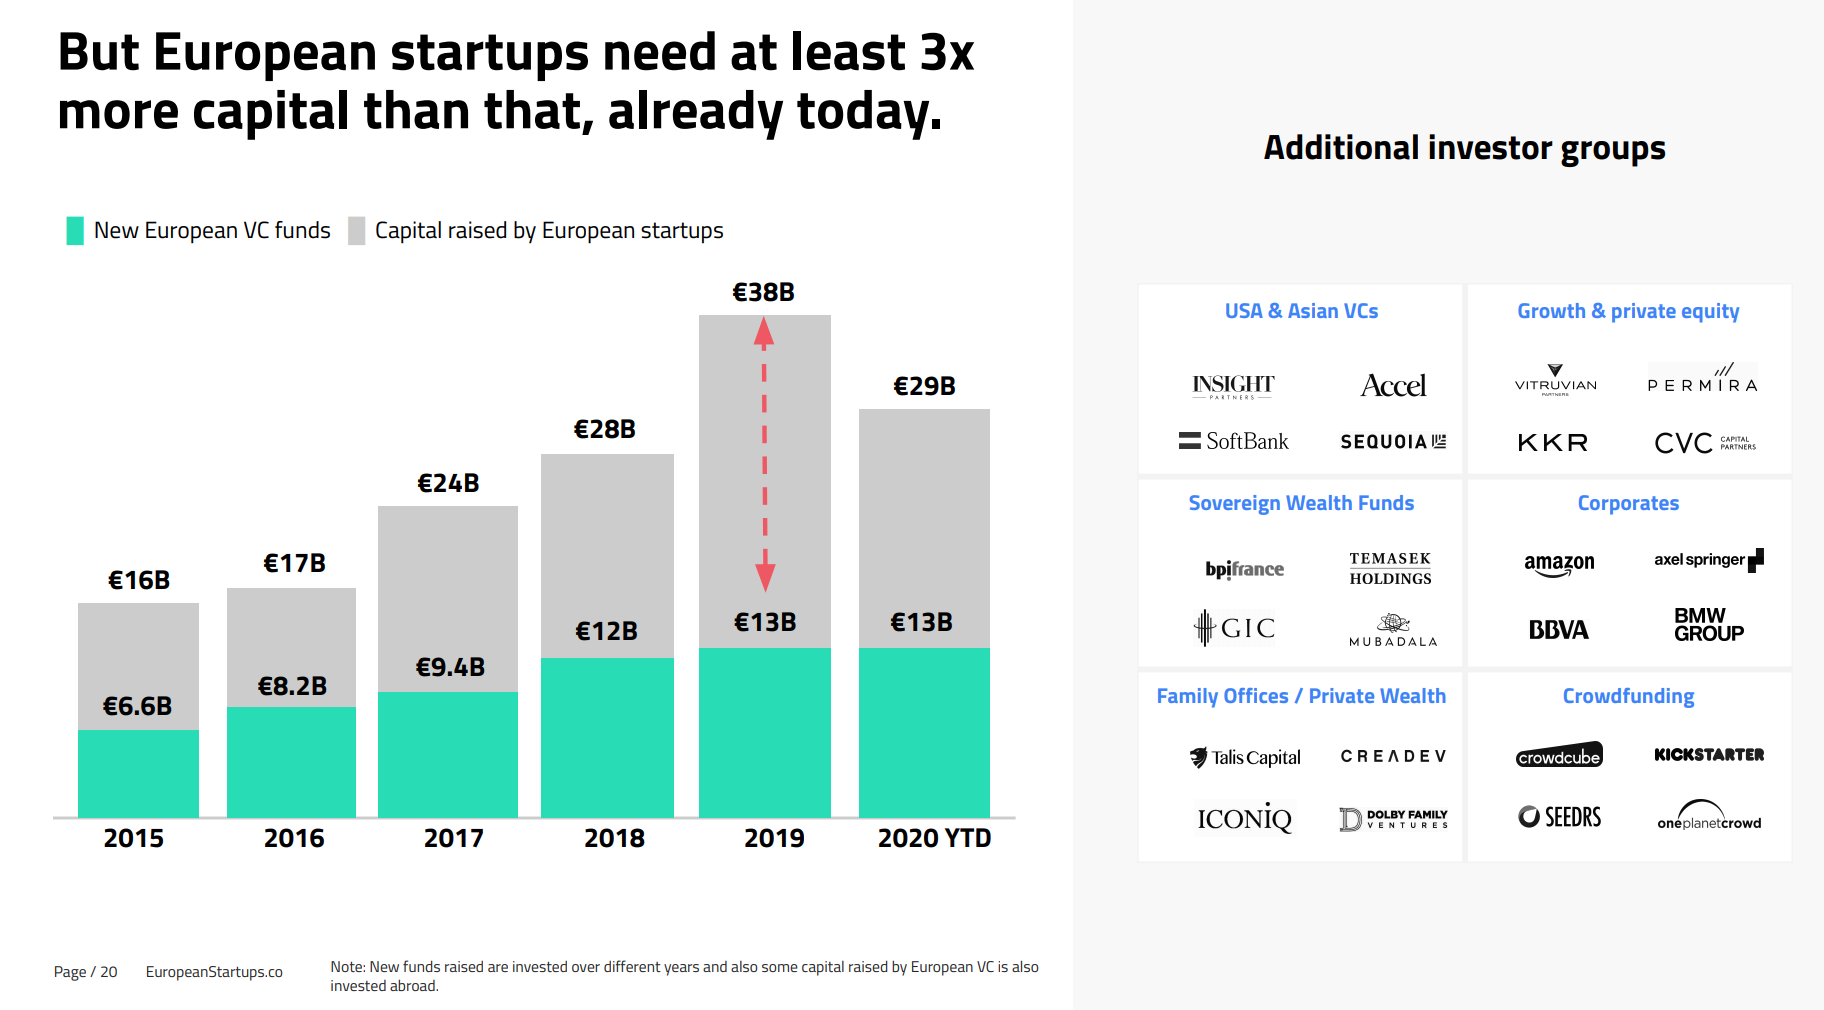 European startups need 3x more capital